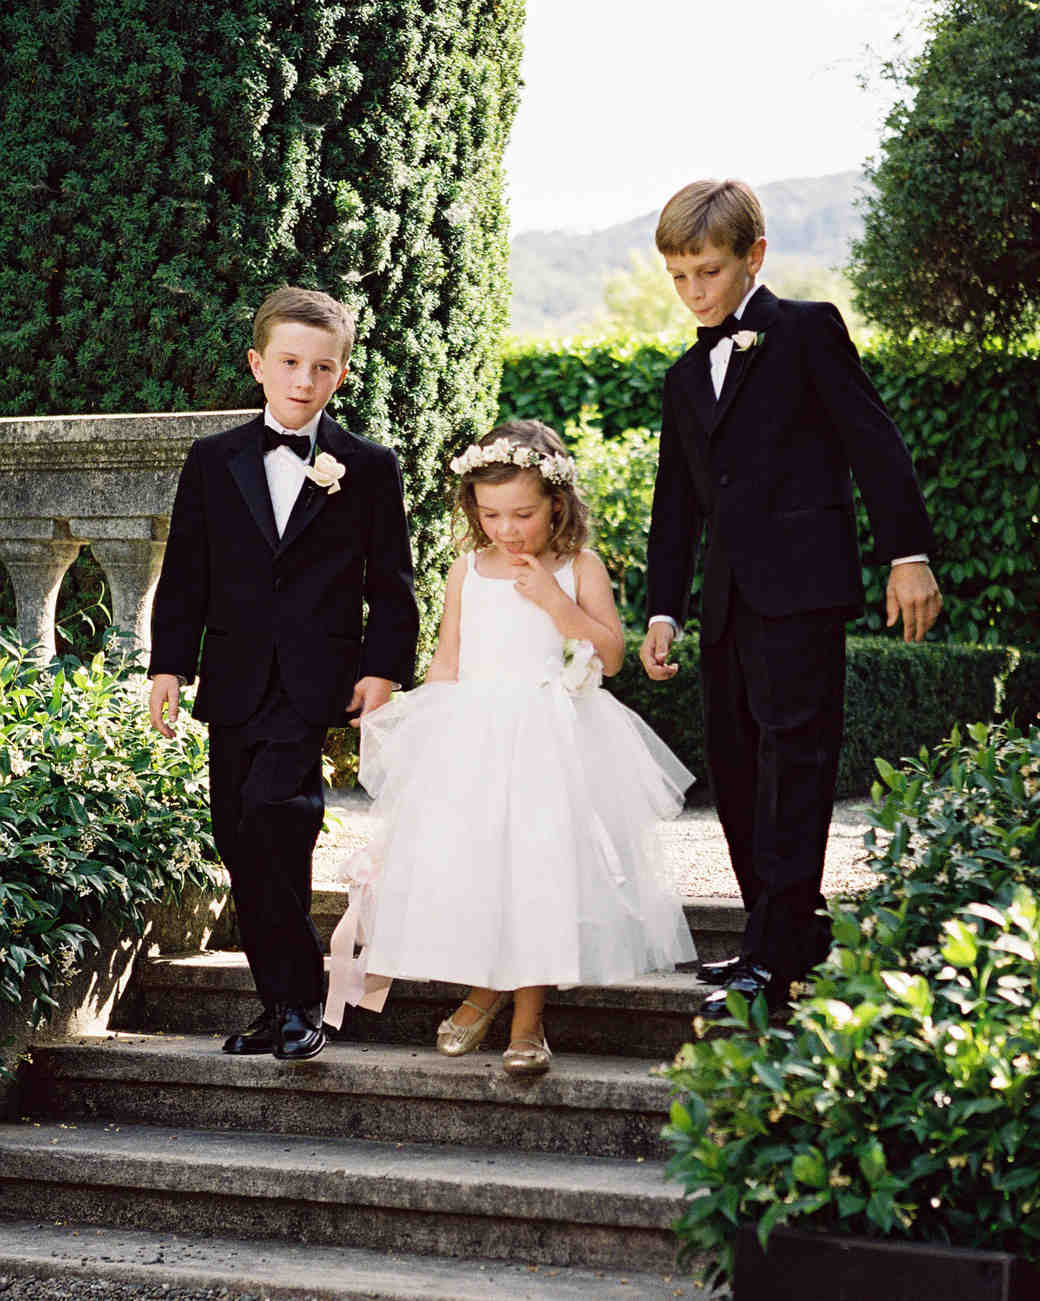 A Glamorous Outdoor Destination Wedding in California | Martha Stewart ...